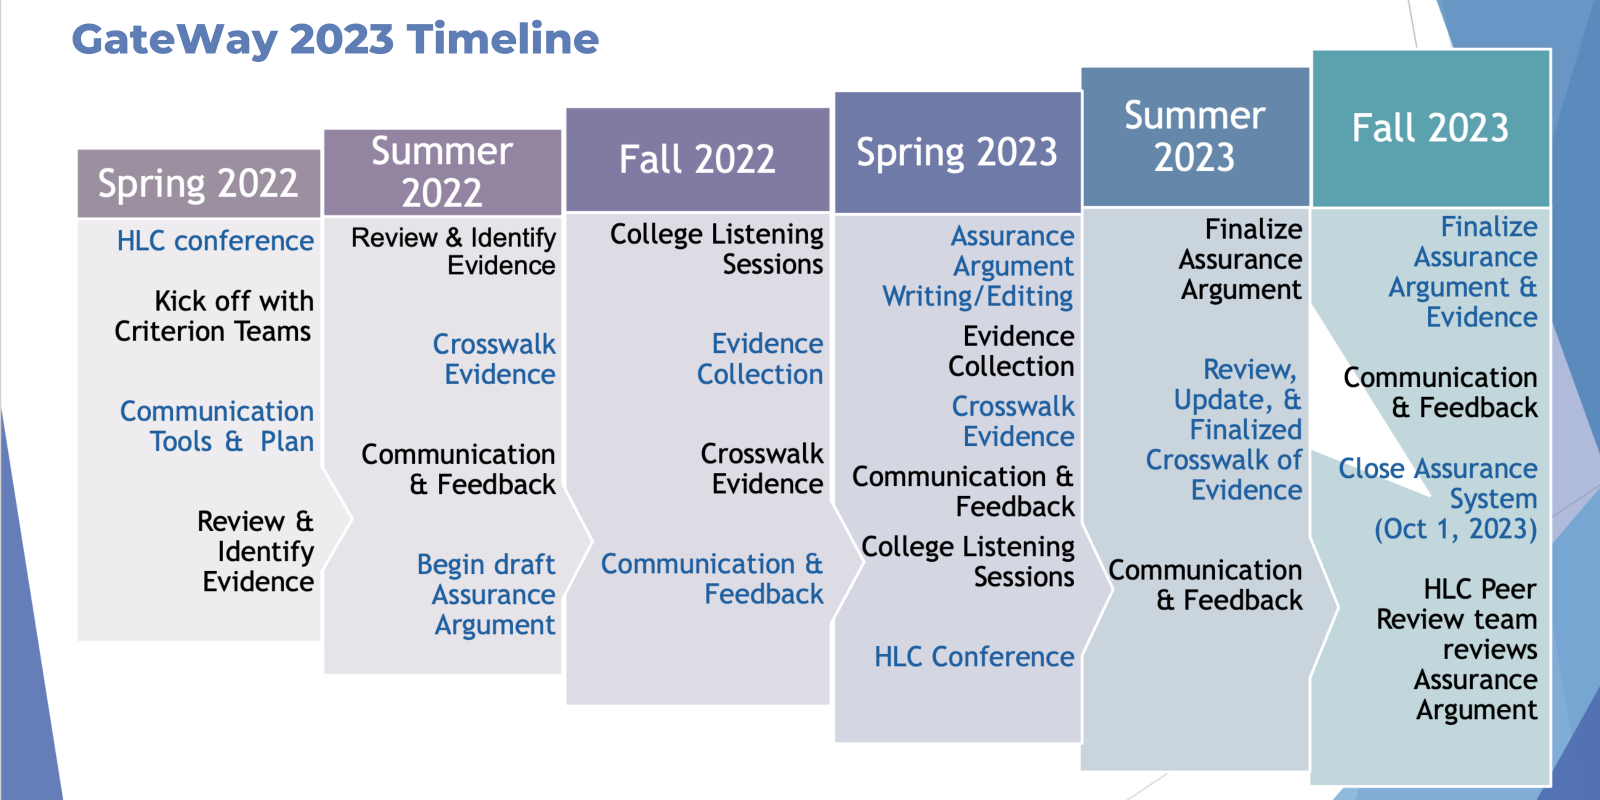 HLC Accreditation Timeline